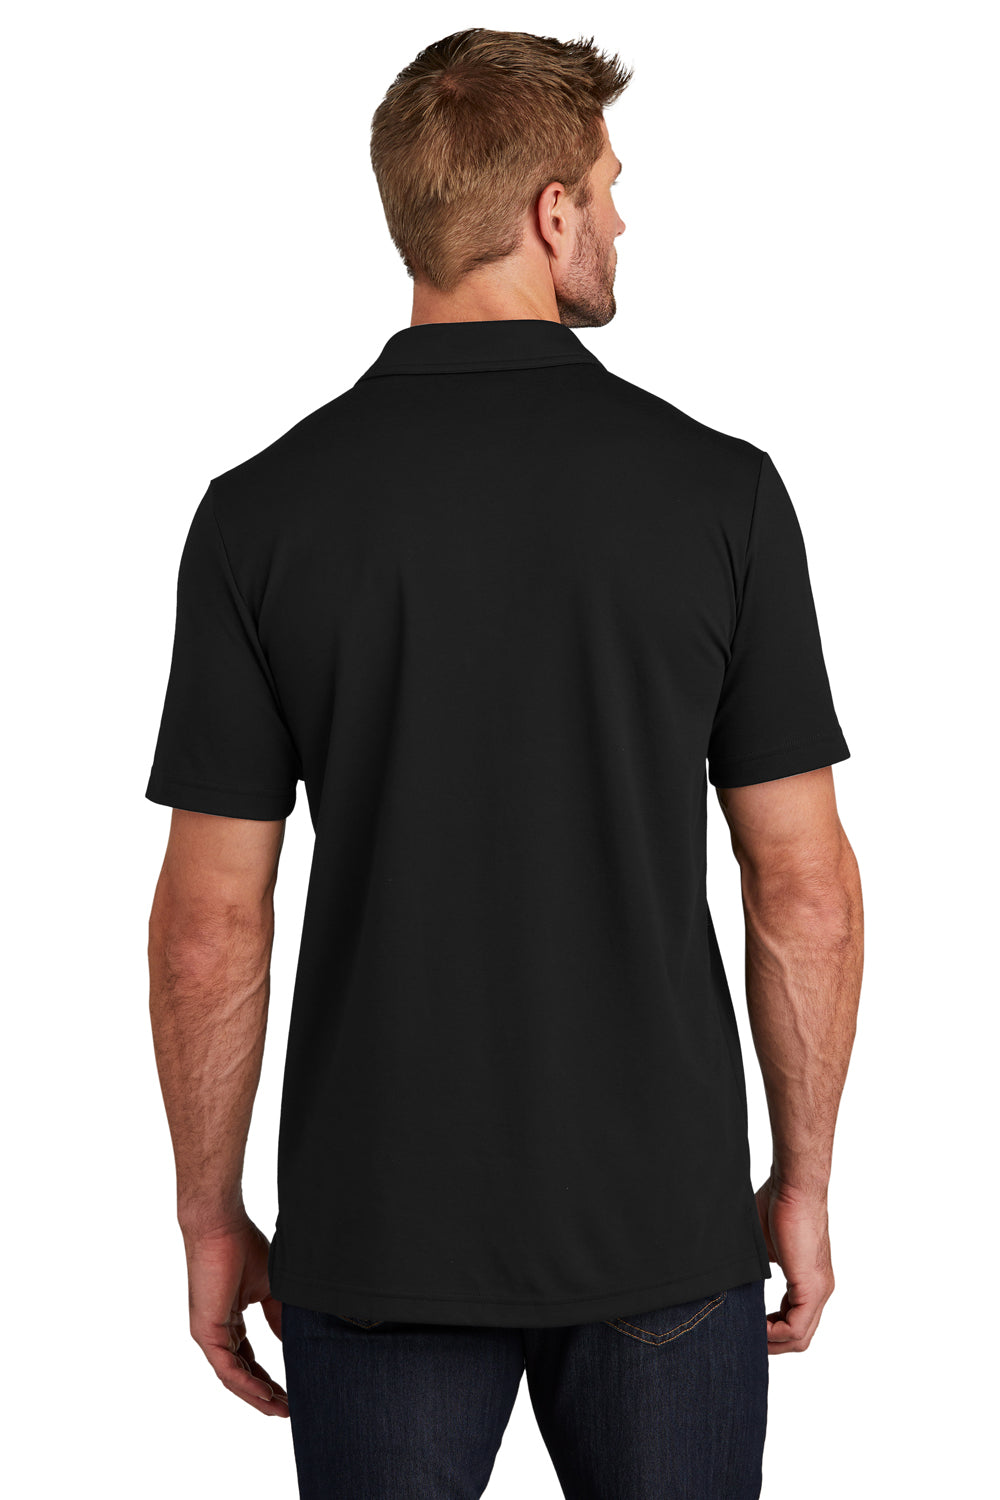 TravisMathew TM1MY402 Mens Coastal Wrinkle Resistant Short Sleeve Polo Shirt Black Model Back